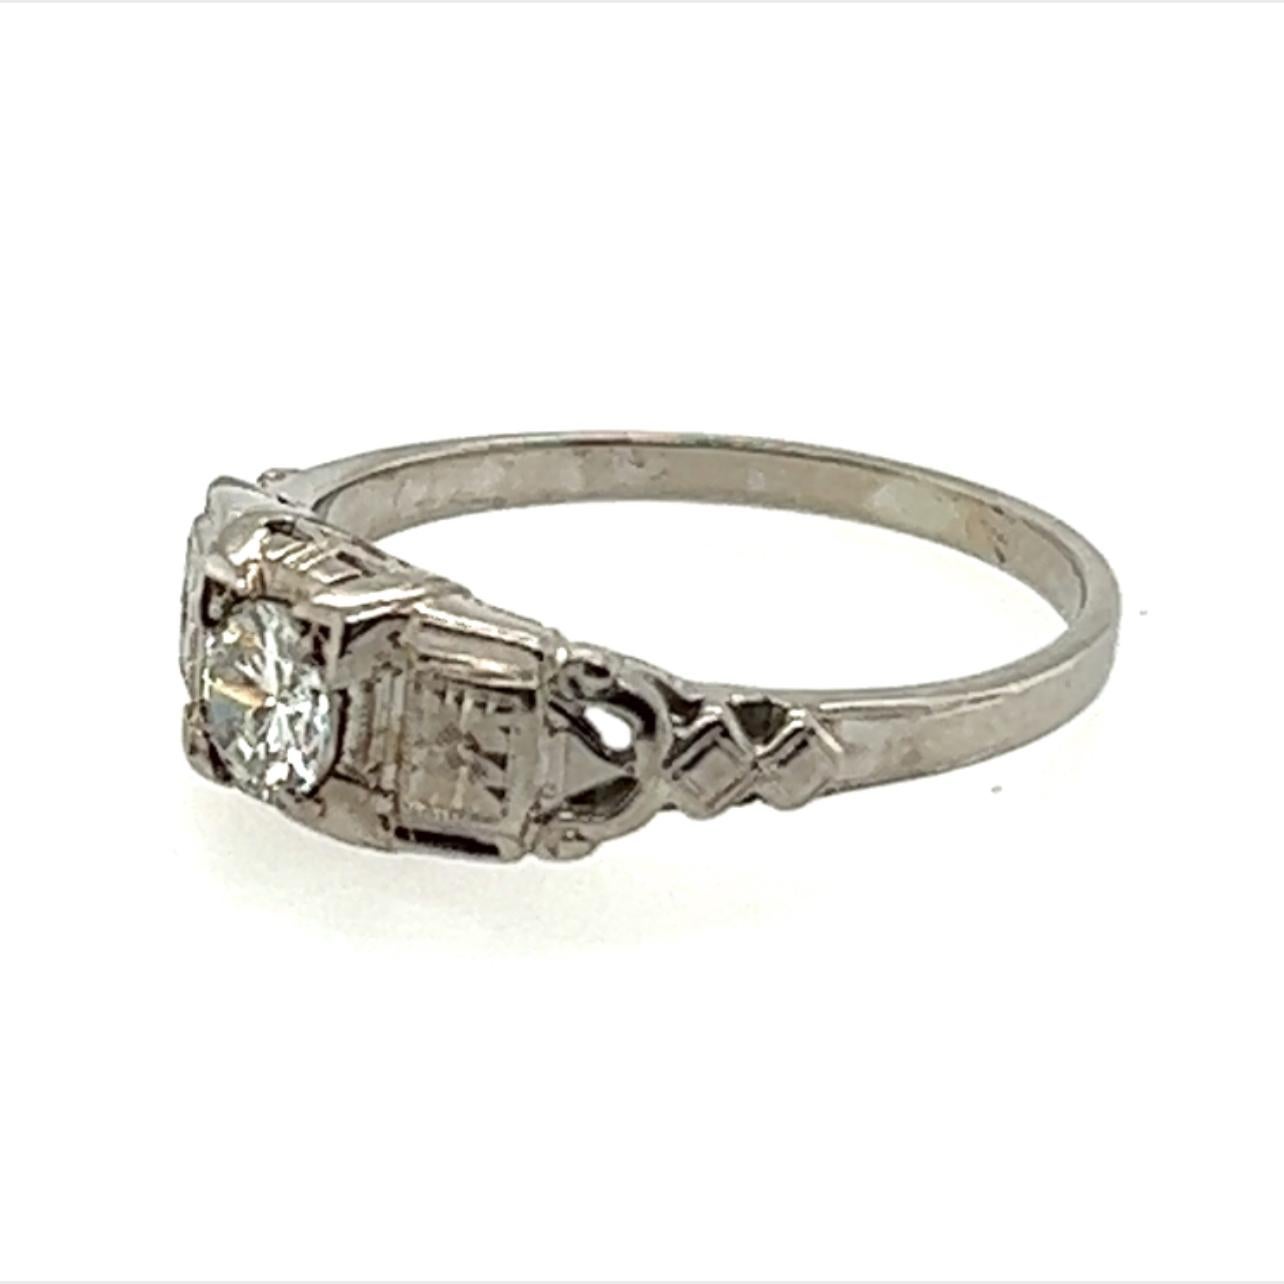 Round Cut Art Deco Solitaire Diamond Ring .30ct Transitional Cut Original 1930s Antique 18